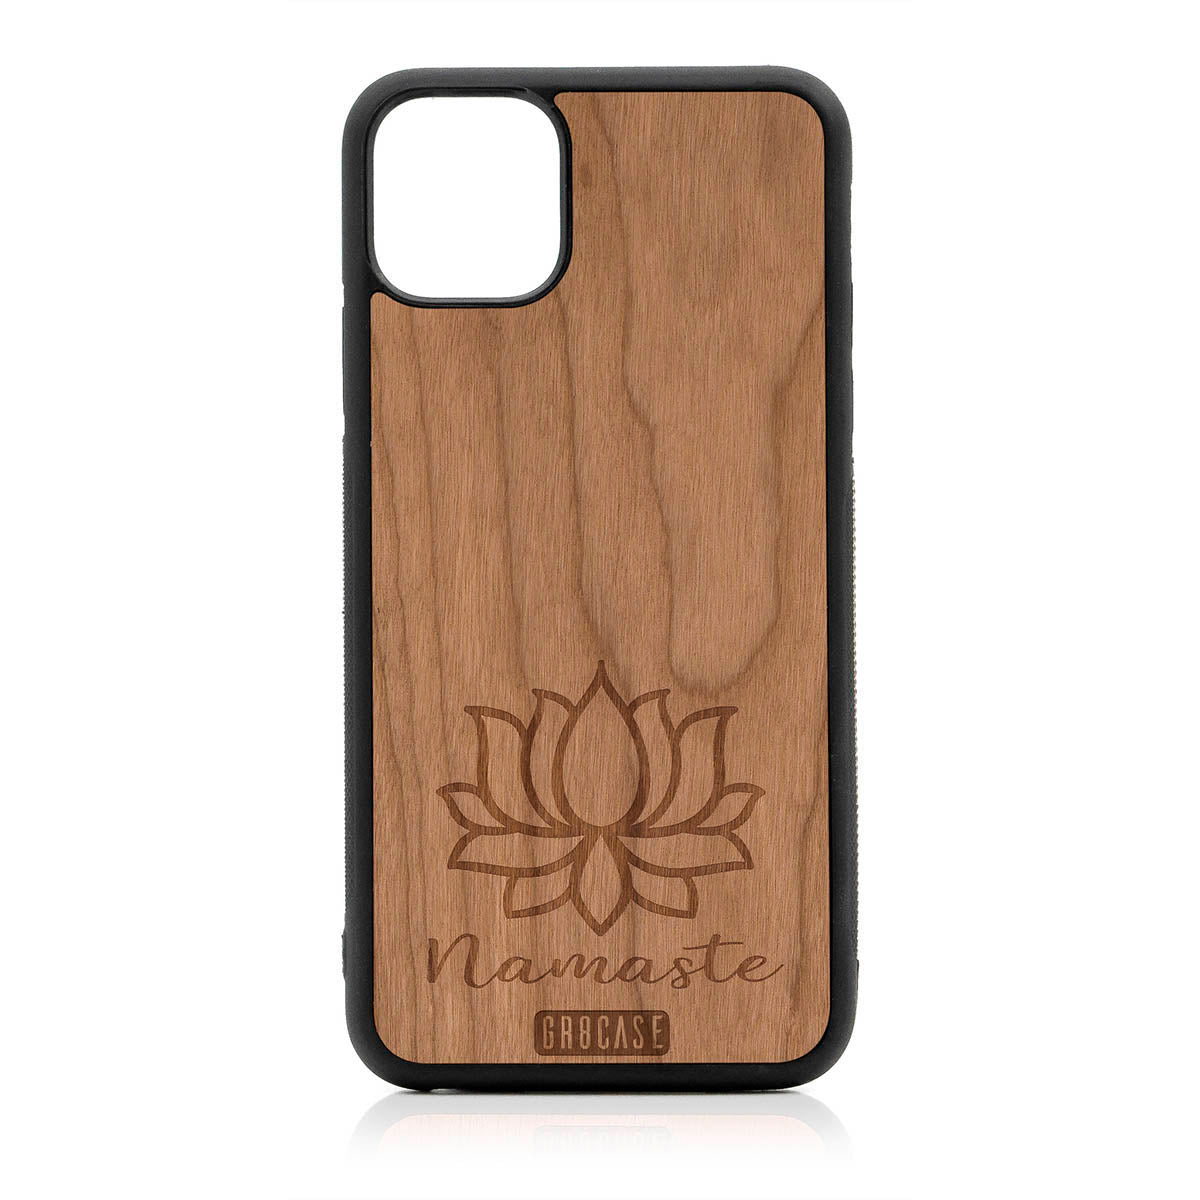 Namaste (Lotus Flower) Design Wood Case For iPhone 11 Pro Max